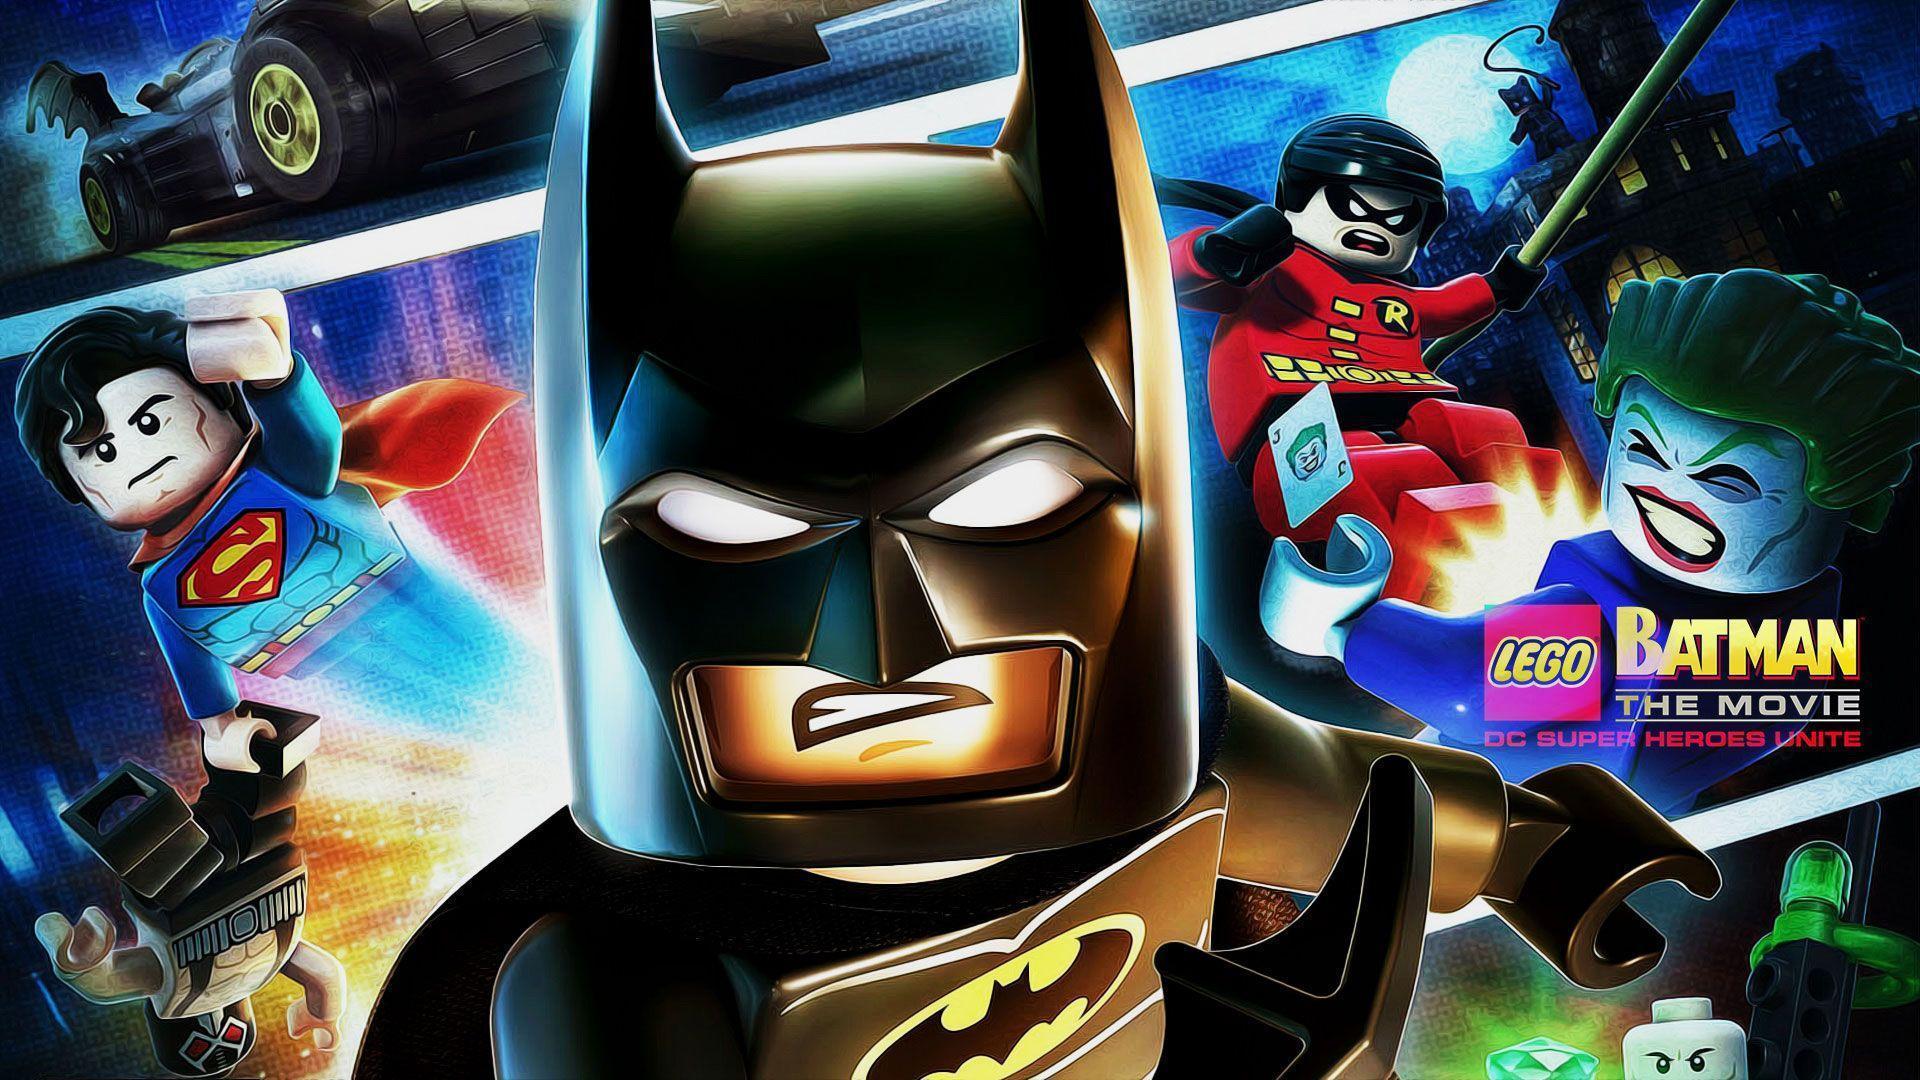 The Lego Batman Movie wallpaper HD film 2017 poster image Free HD